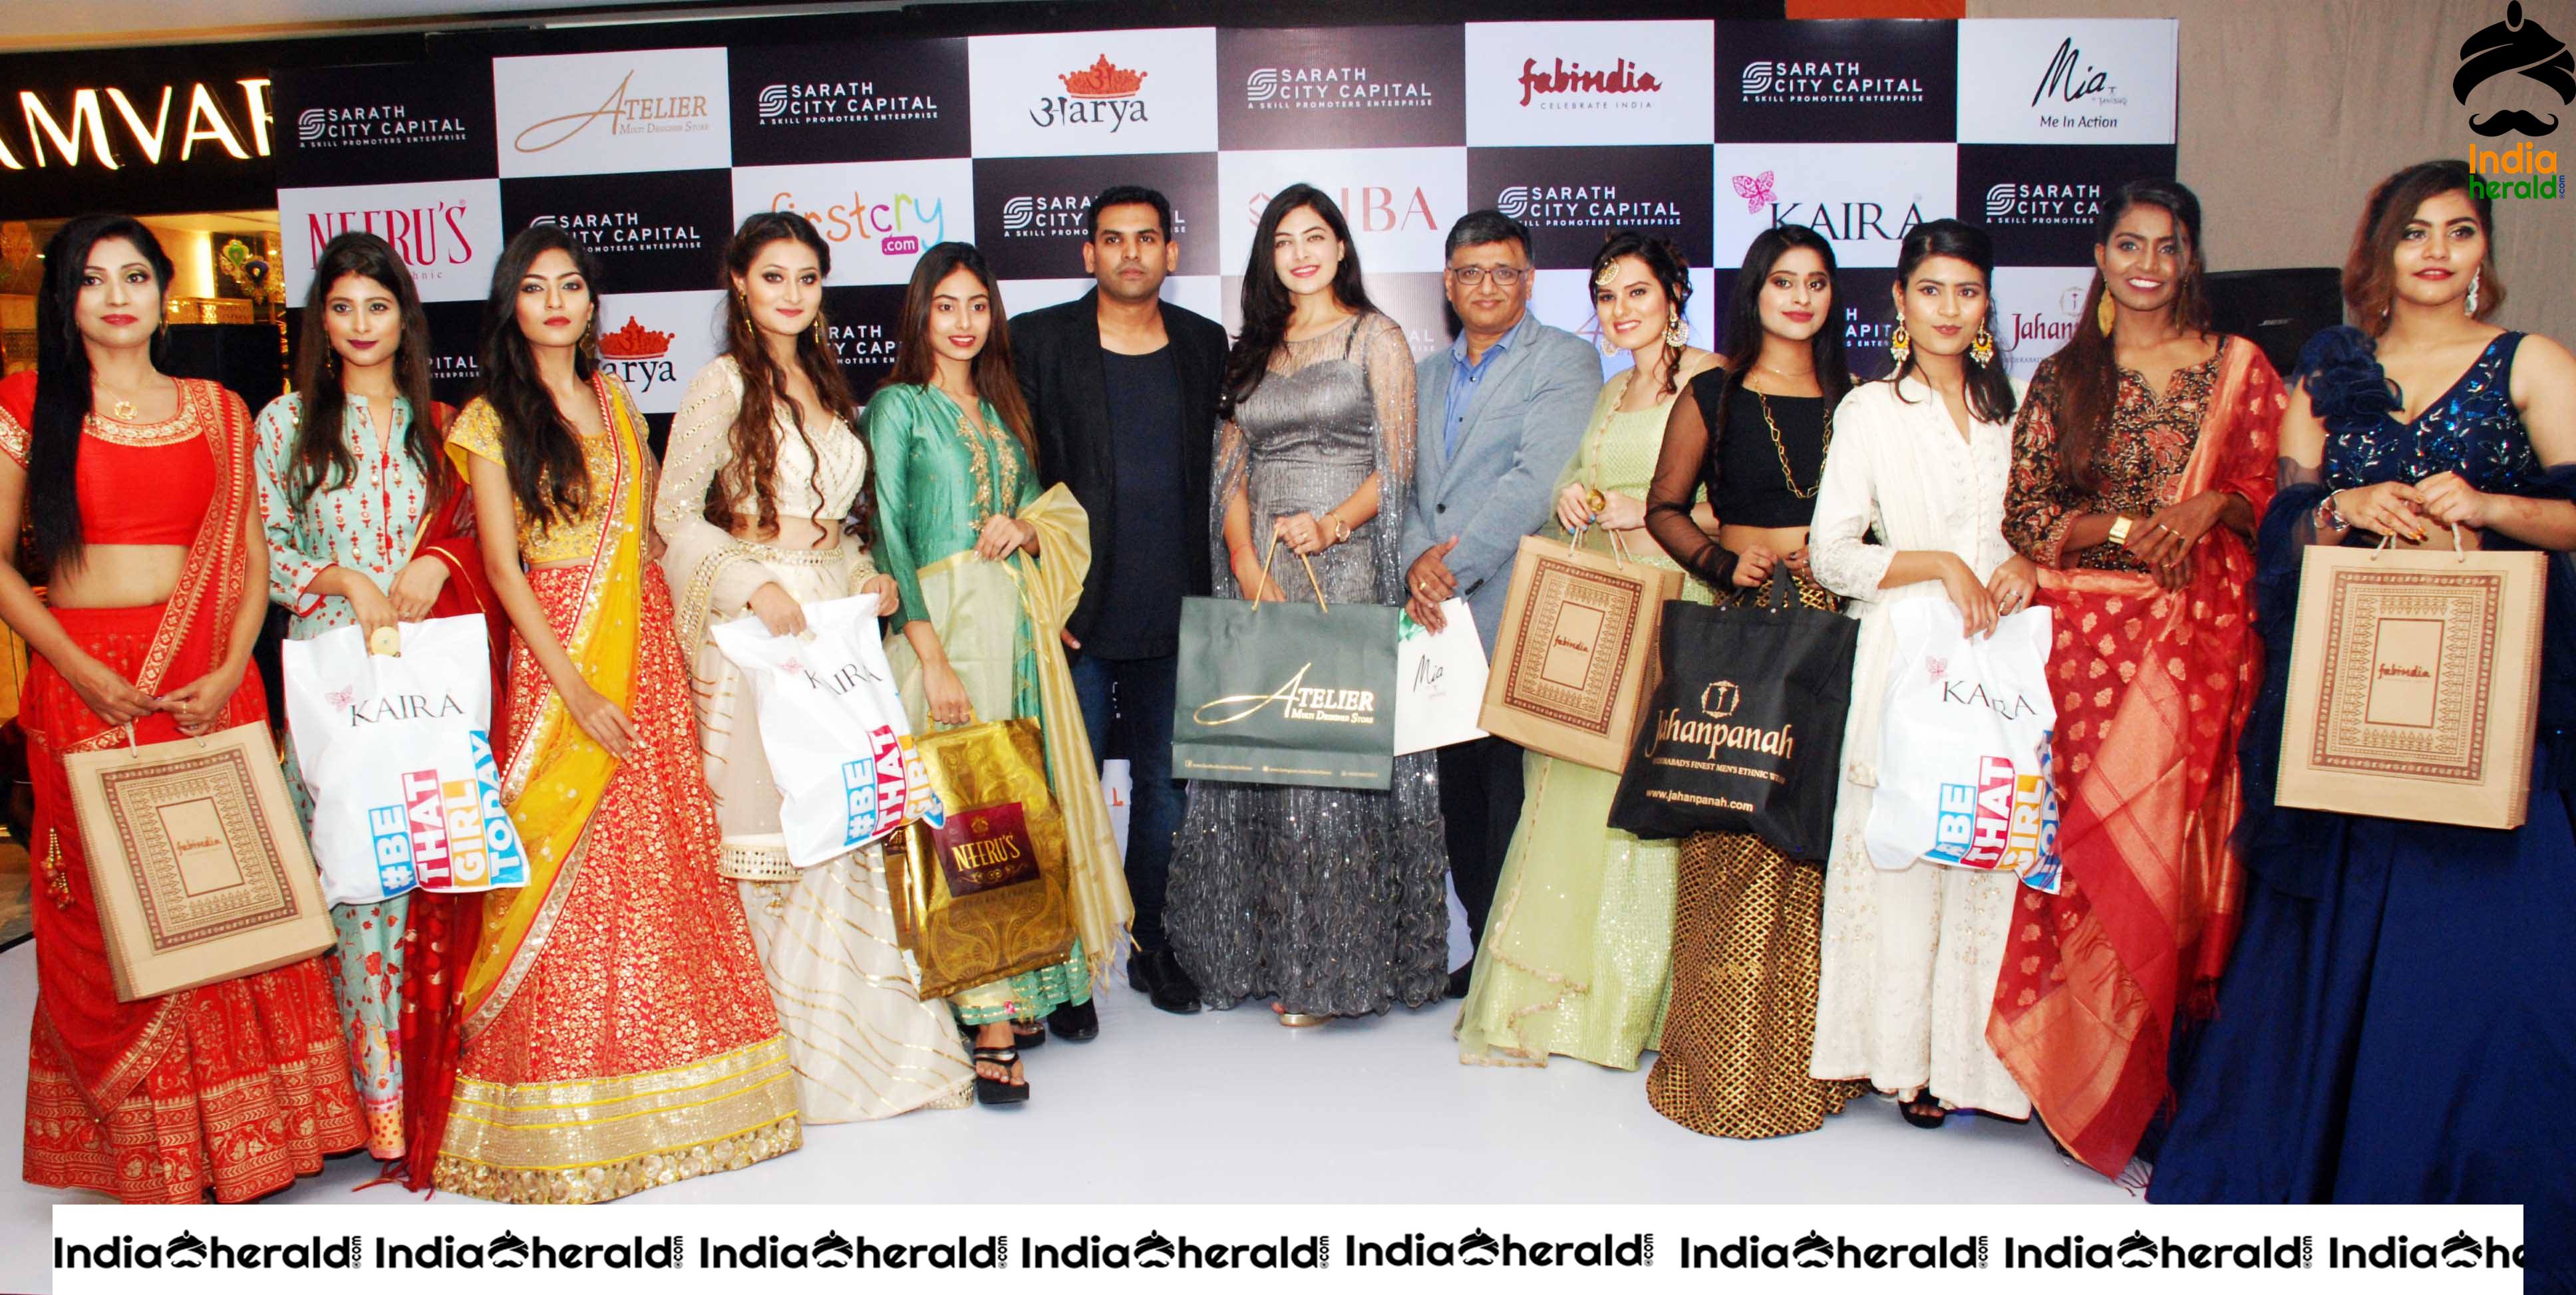 Grand Fashion Show at Sarath City Capital Mall at Kondapur Set 1